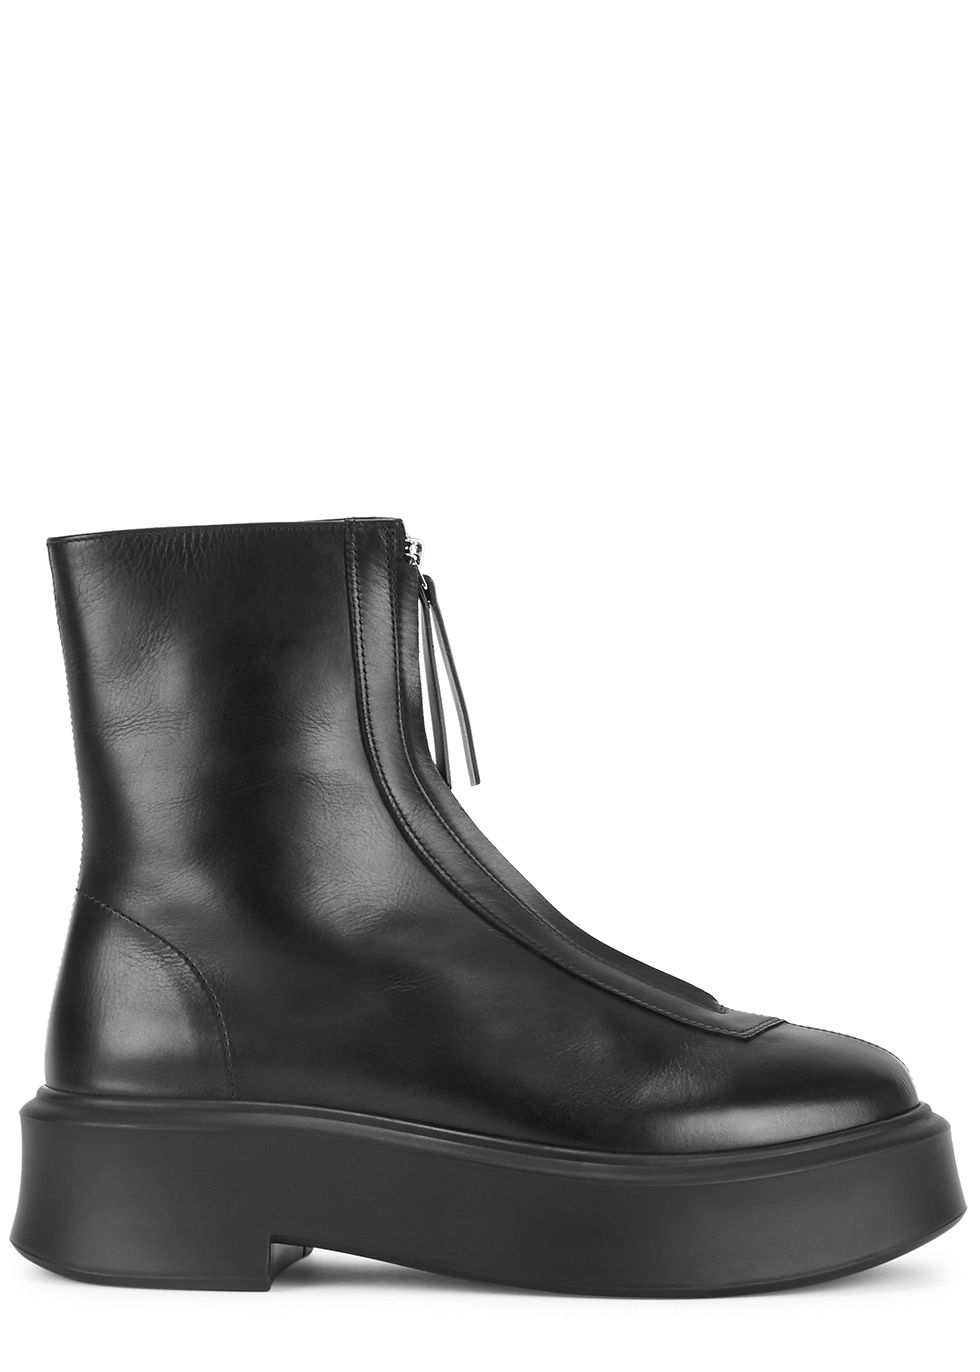 Zipped 1 black leather flatform ankle boots | Harvey Nichols (Global)